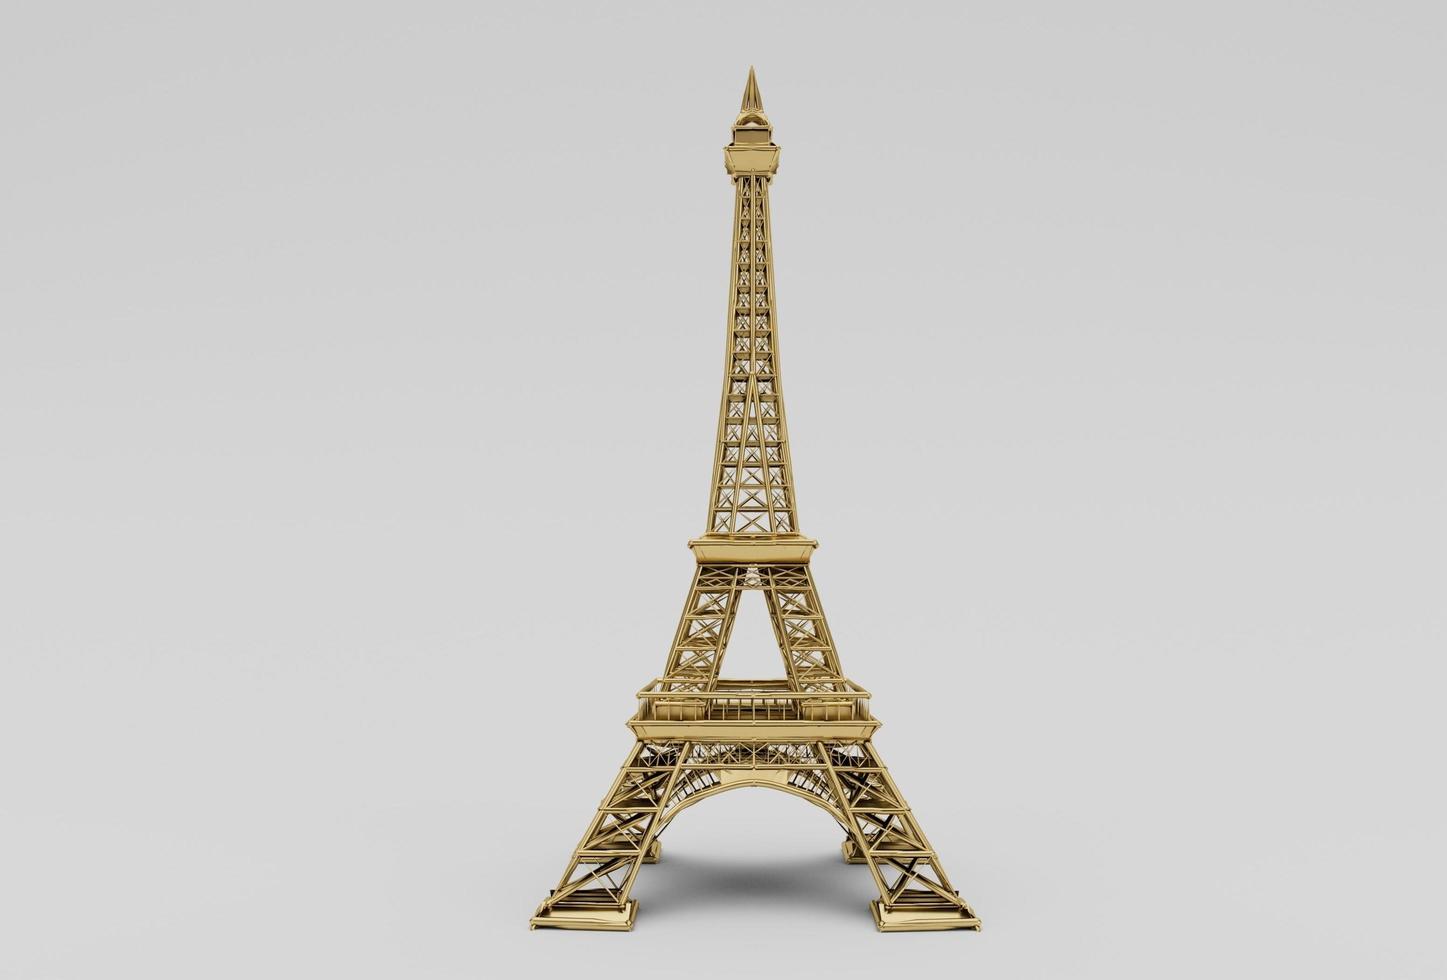 golden Eiffel Tower minimal 3d illustration on white background. photo